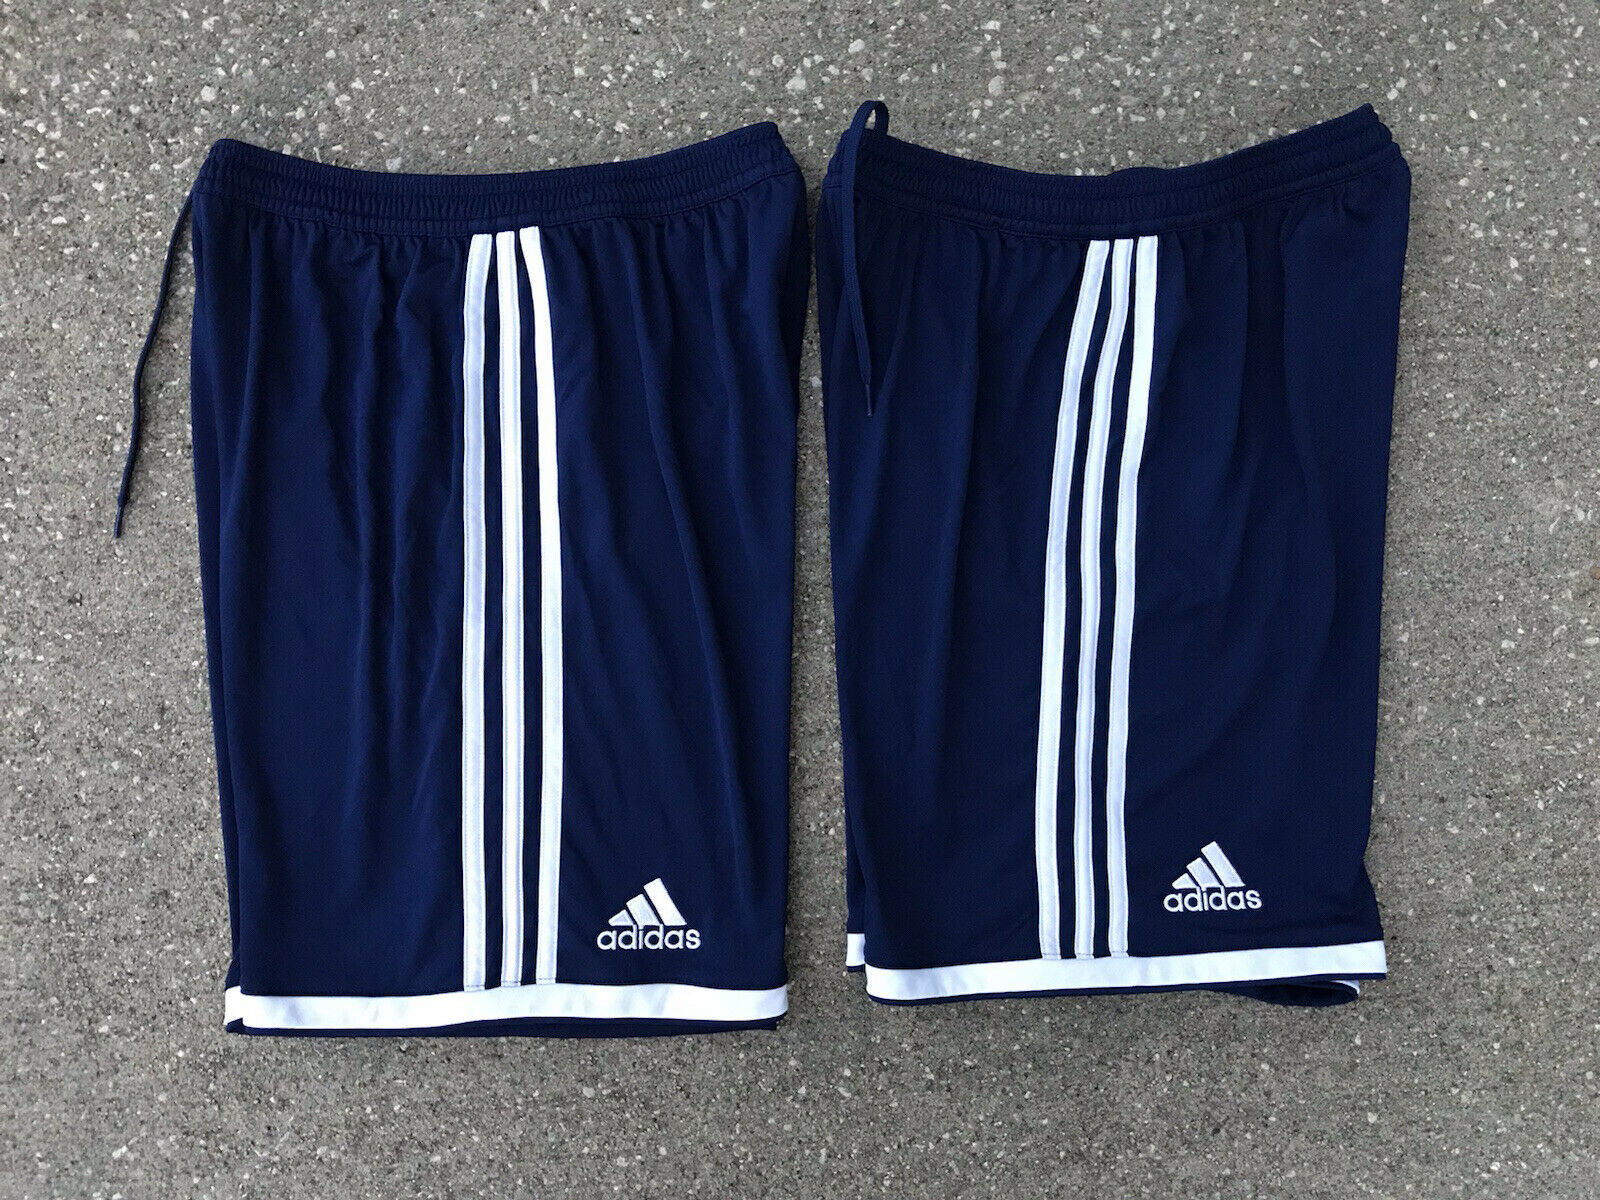 Adidas Climalite Youth Xl Soccer Shorts Lot 2 Pair Navy Blue White Stripe Cf9588